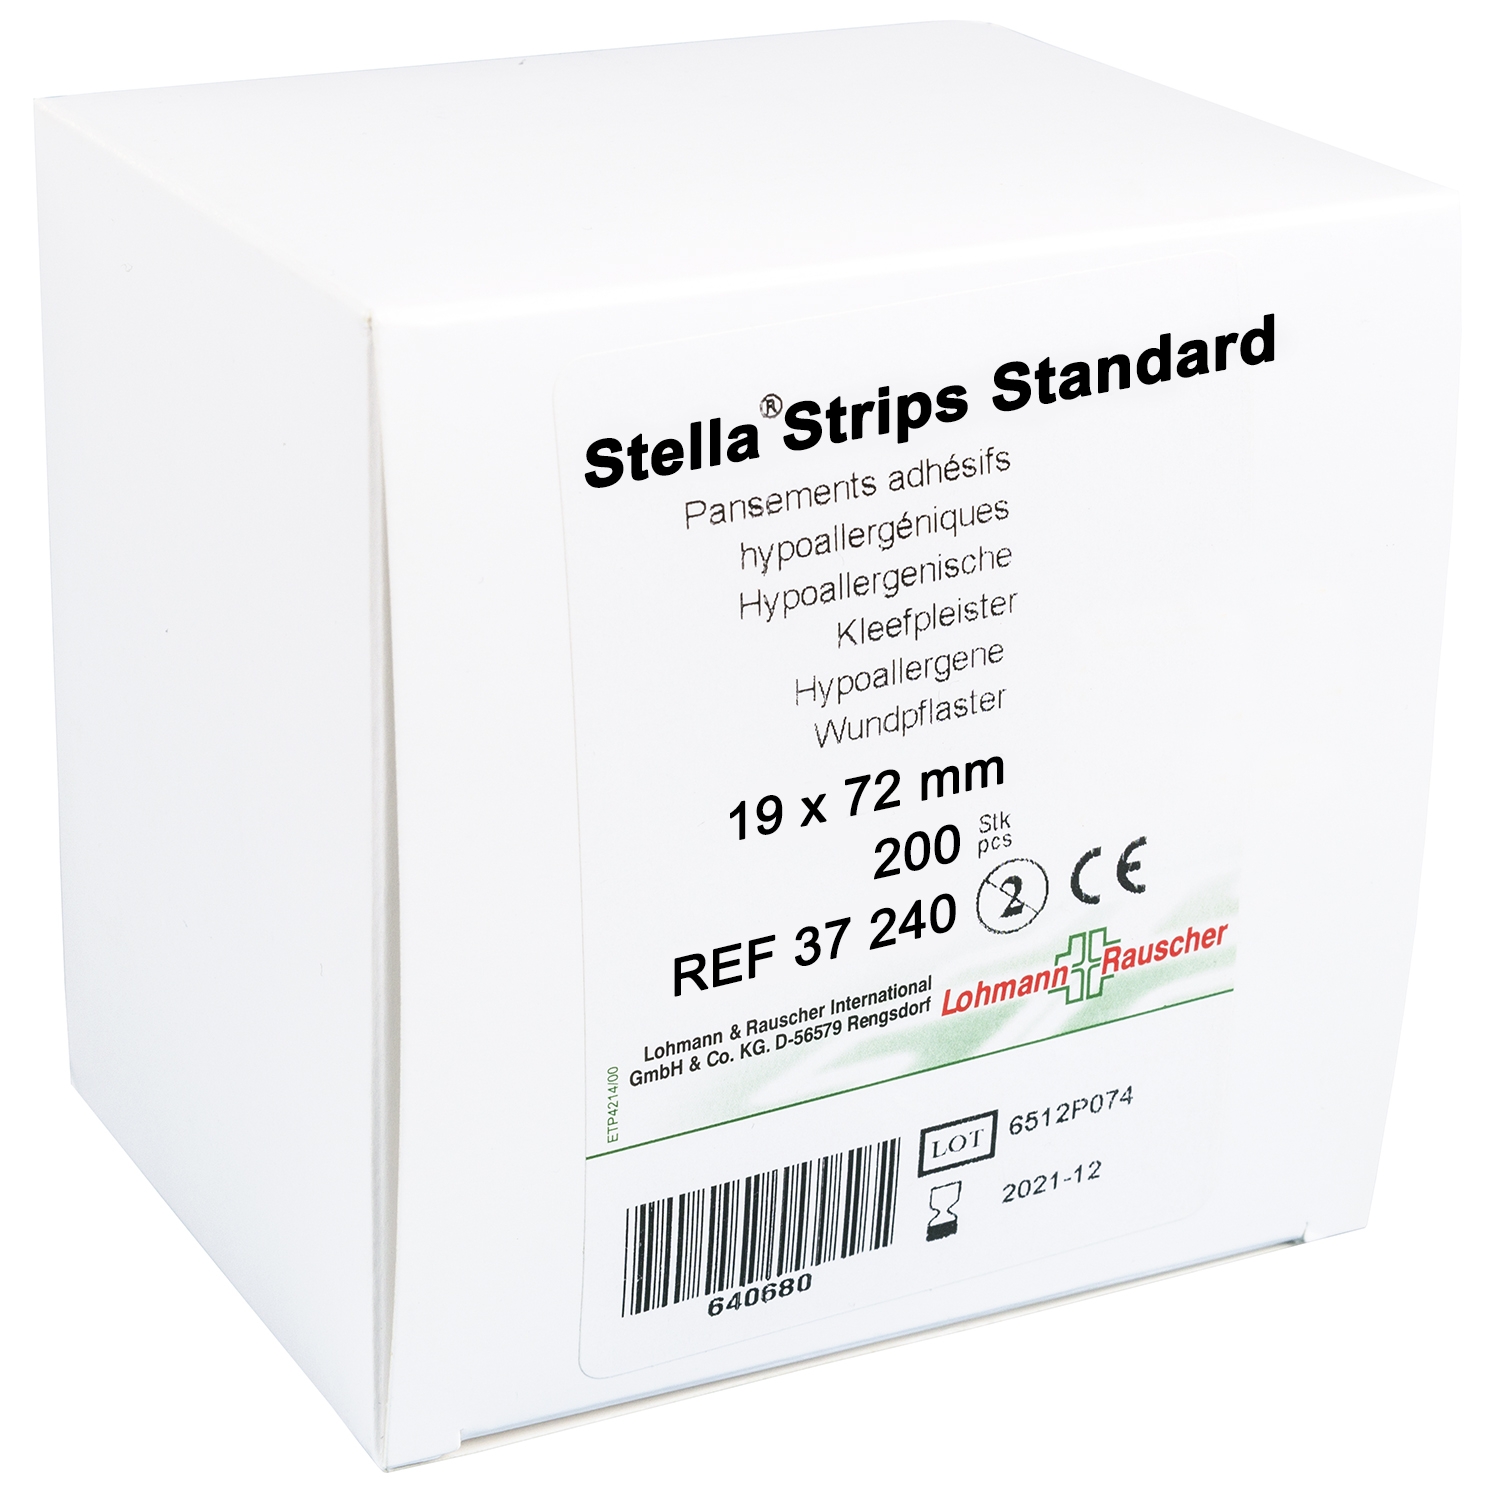 Stellastrips standard - 1,9 x 7,2 cm (200 pcs)